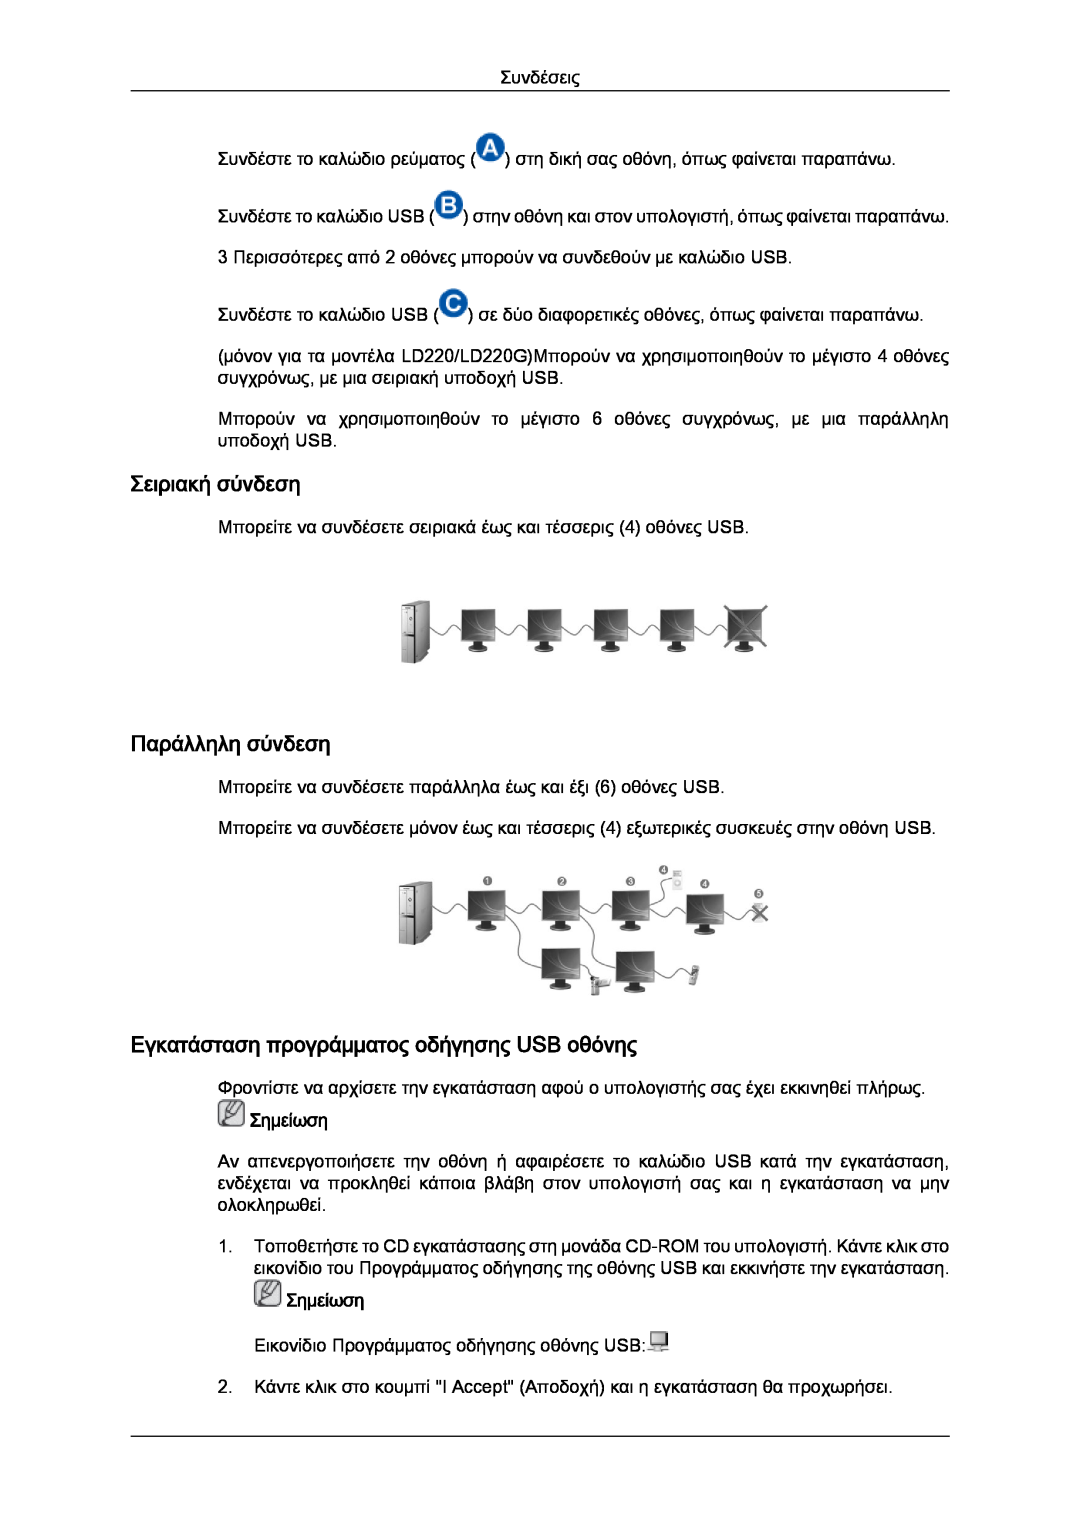 Samsung LS22LFUGF/EN manual Σειριακή σύνδεση, Παράλληλη σύνδεση, Εγκατάσταση προγράμματος οδήγησης USB οθόνης, Σημείωση 